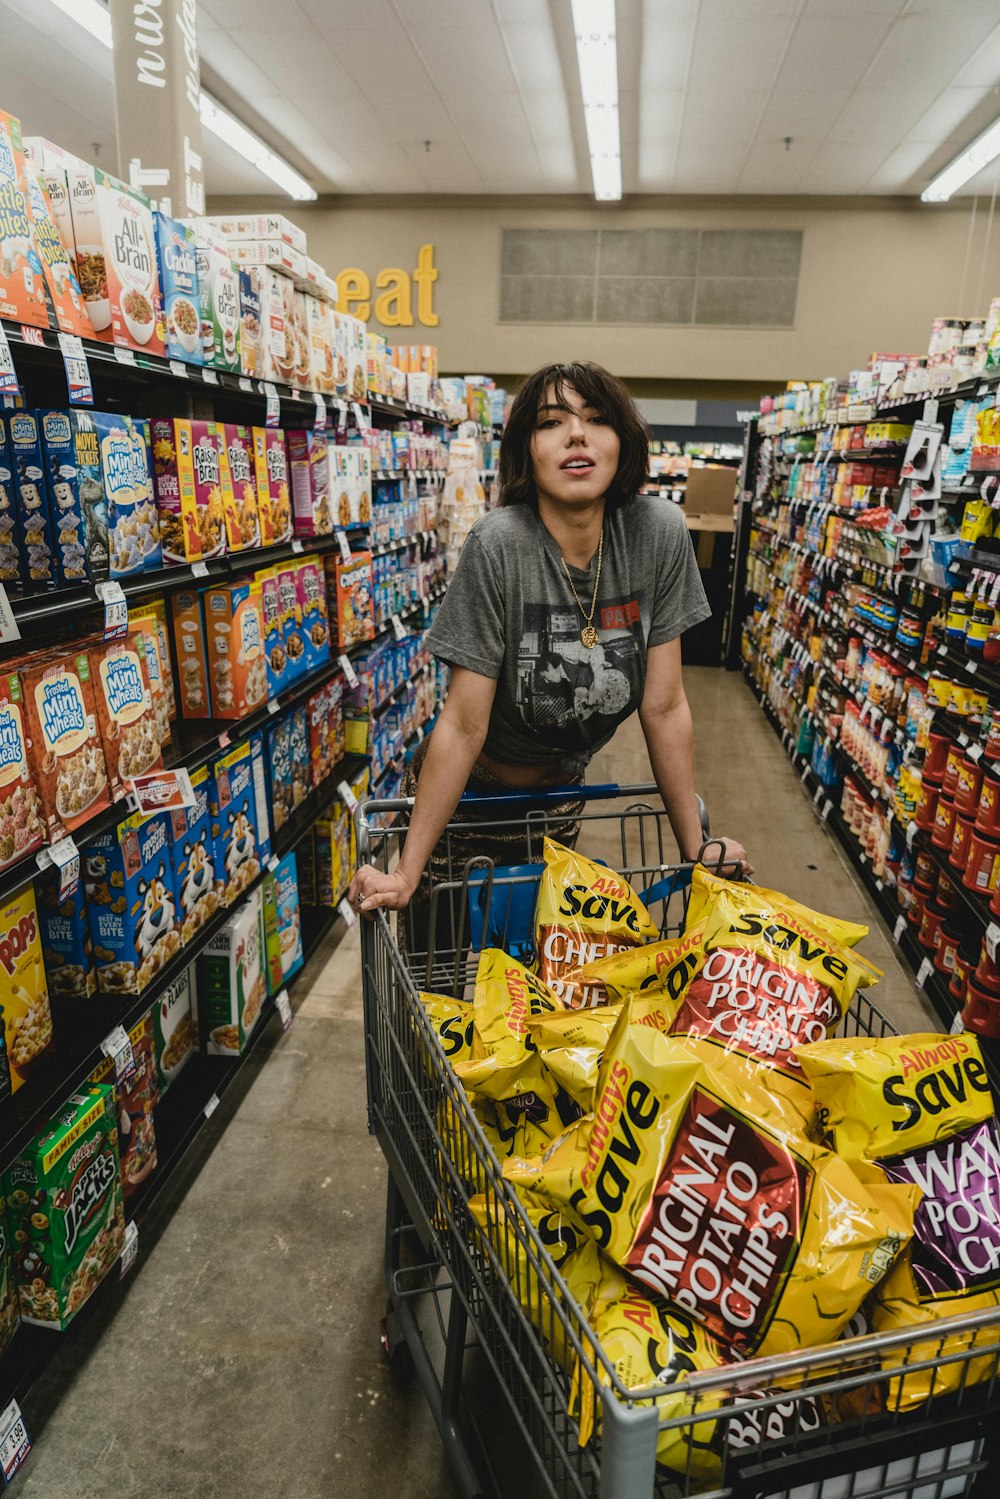 woman in gray shirt holding shopping cart with Original Potato Chips bag lot